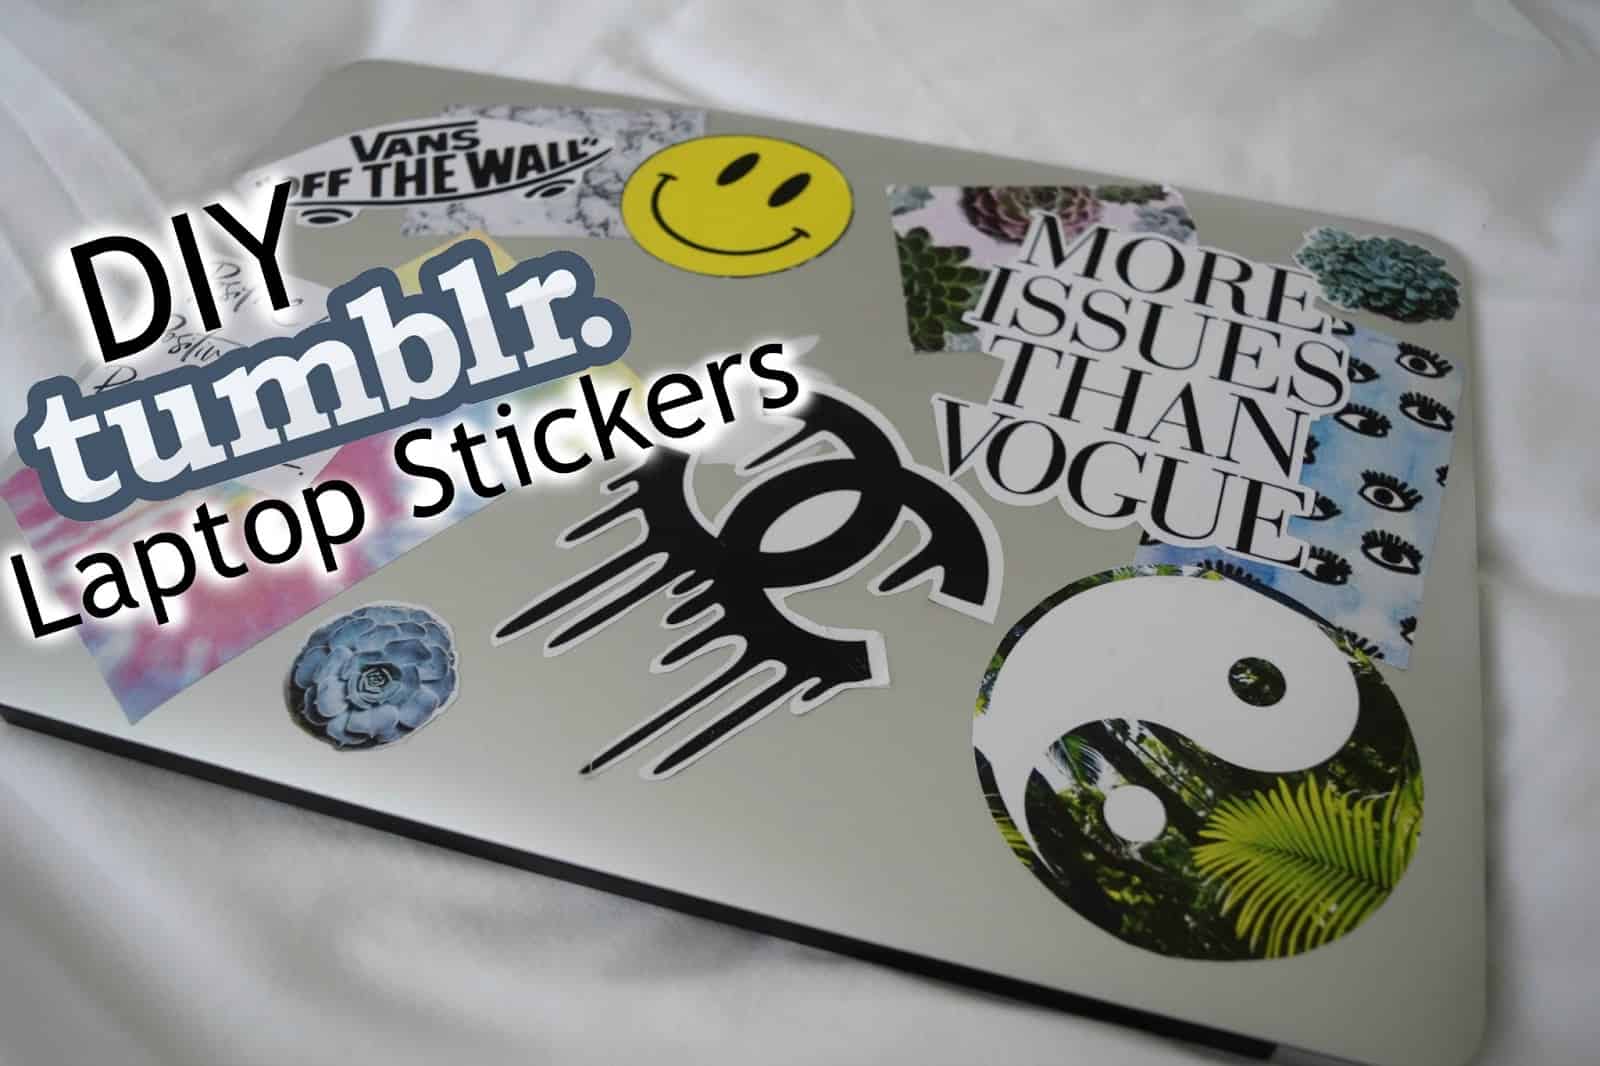 DIY laptop stickers